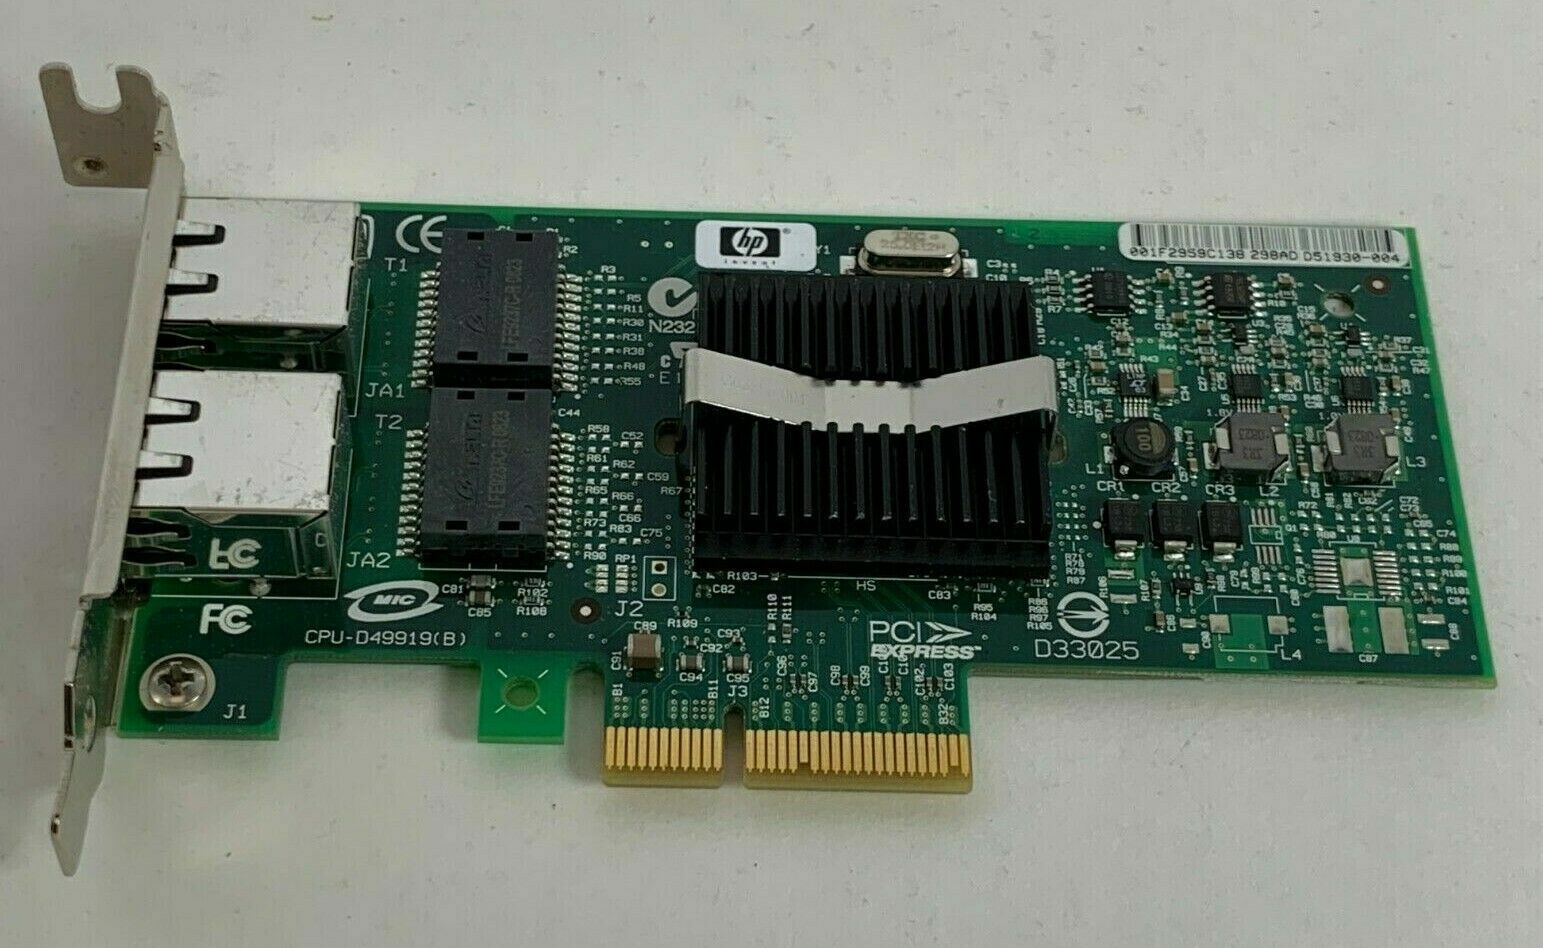 Intel Dual Port Server Adapter Card CPU-D49919 (B)